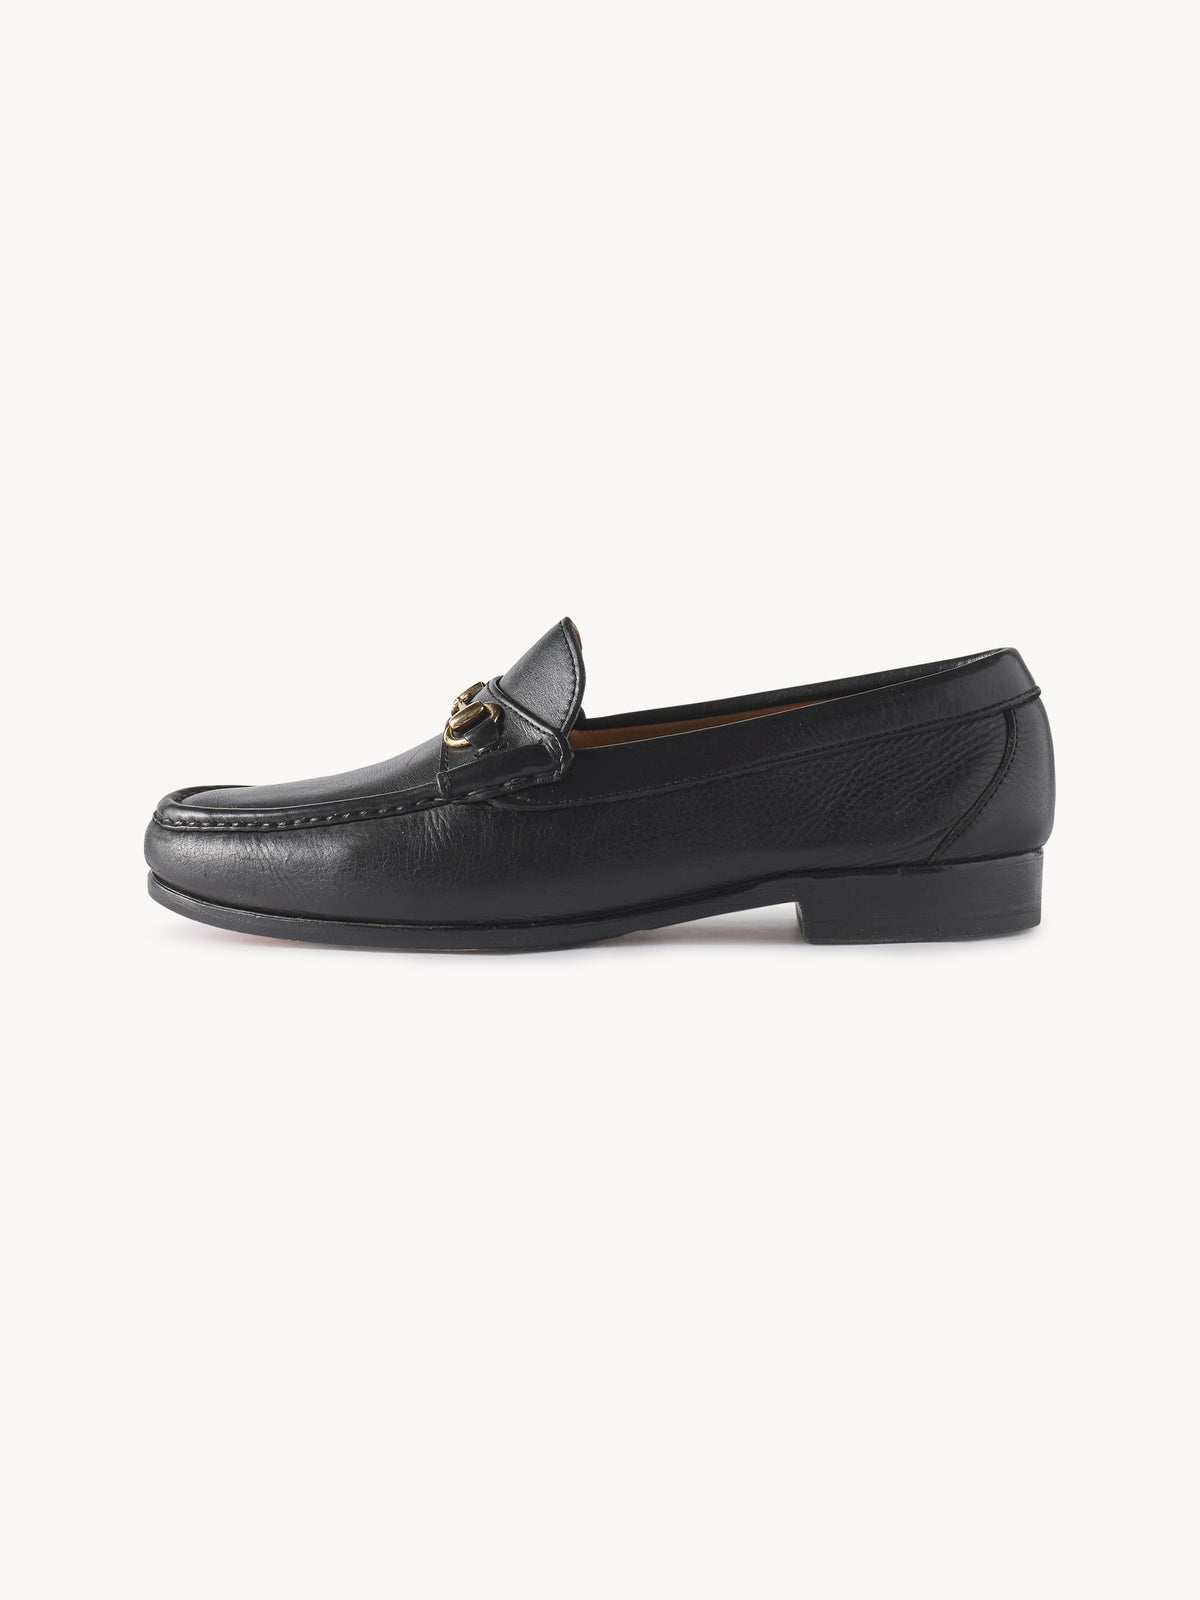 Alden Loafers, Black - 0132 - Product flat